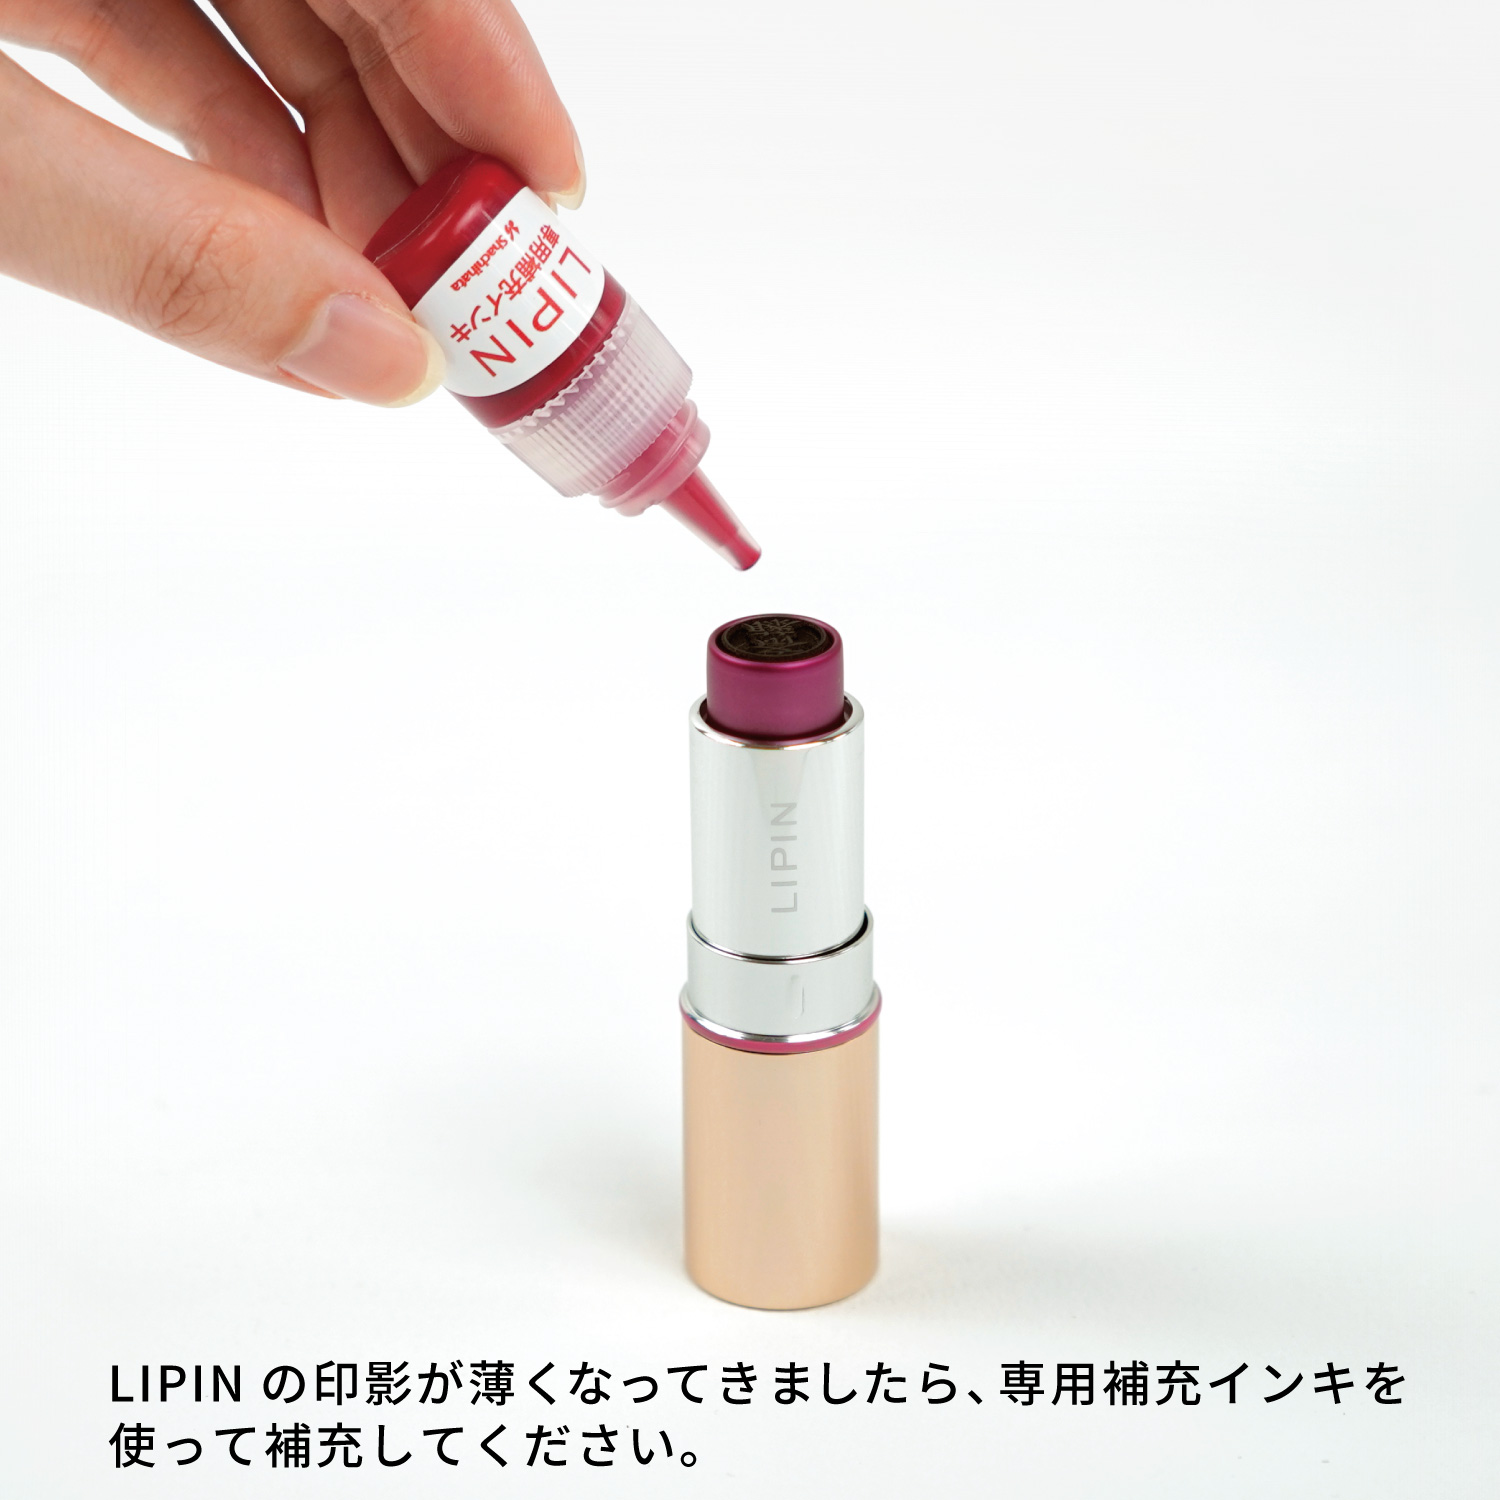 LIPIN 専用補充インキ プラムピンク 5ml|XL-LSR5-PP|商品カタログ 